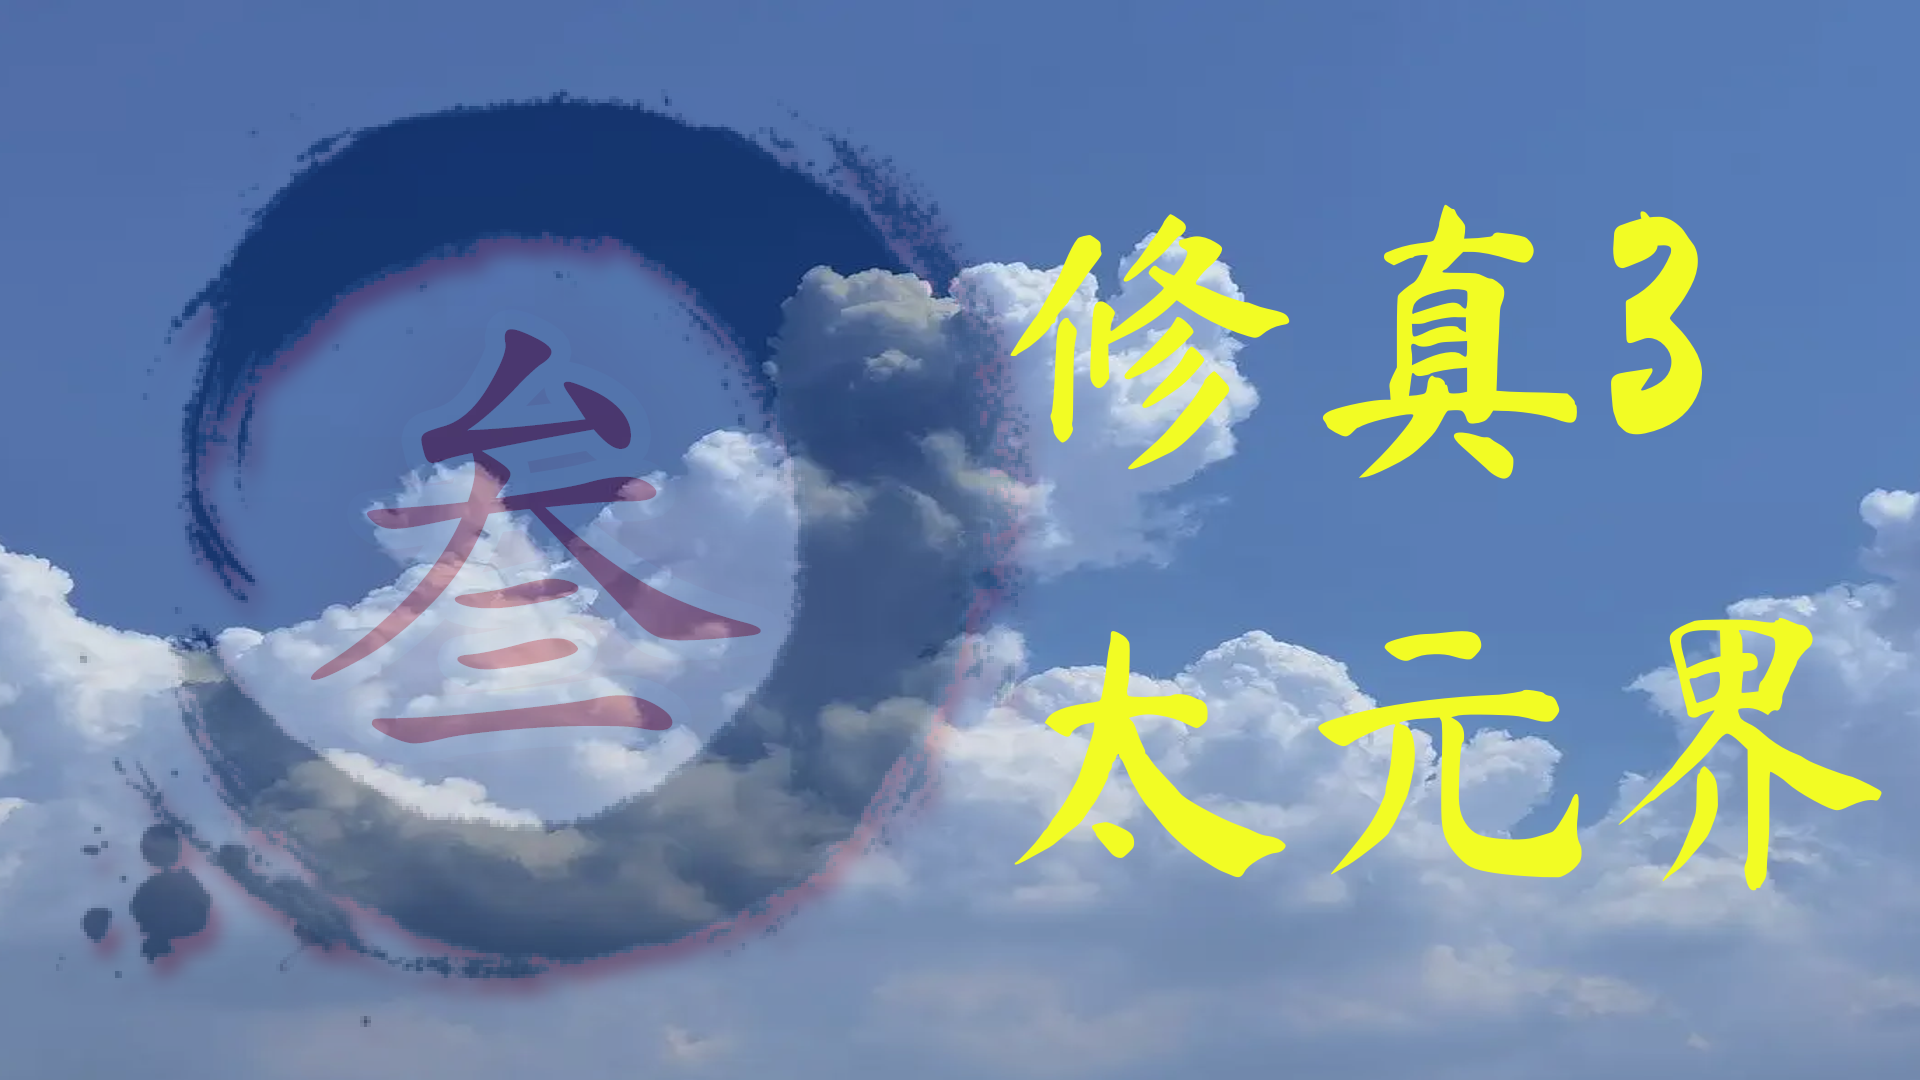 Banner of Cultivo 3 Reino Taiyuan 1.68